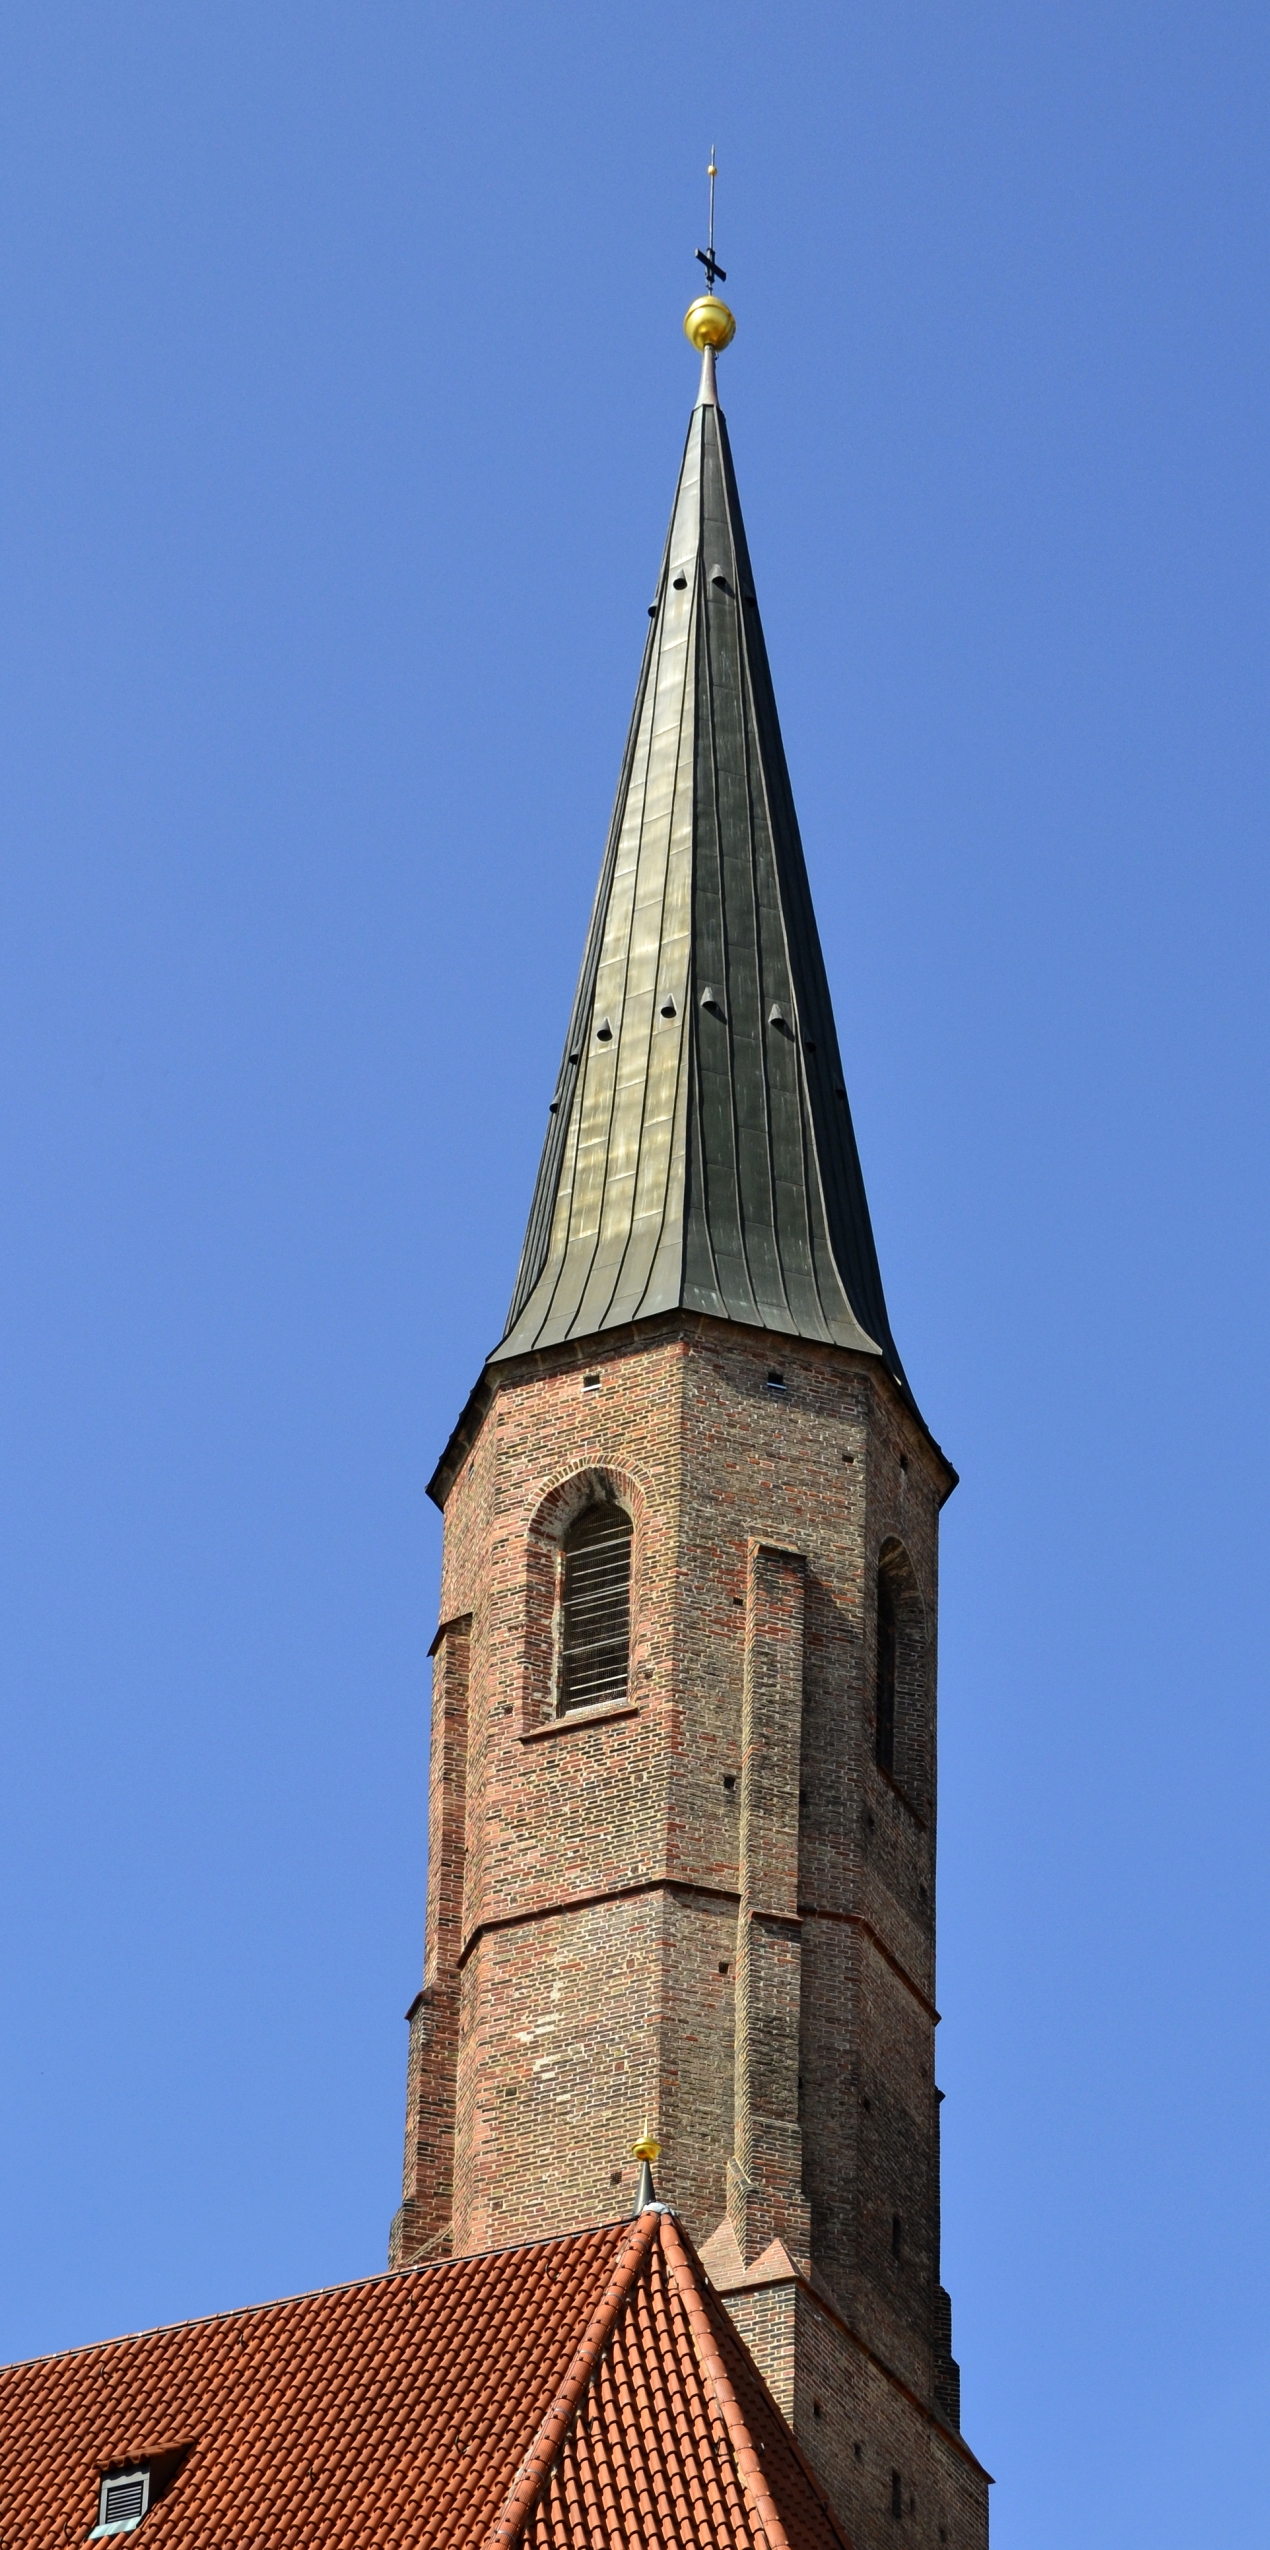 File:St. Salvator in Munich - church tower.JPG - Wikimedia Commons